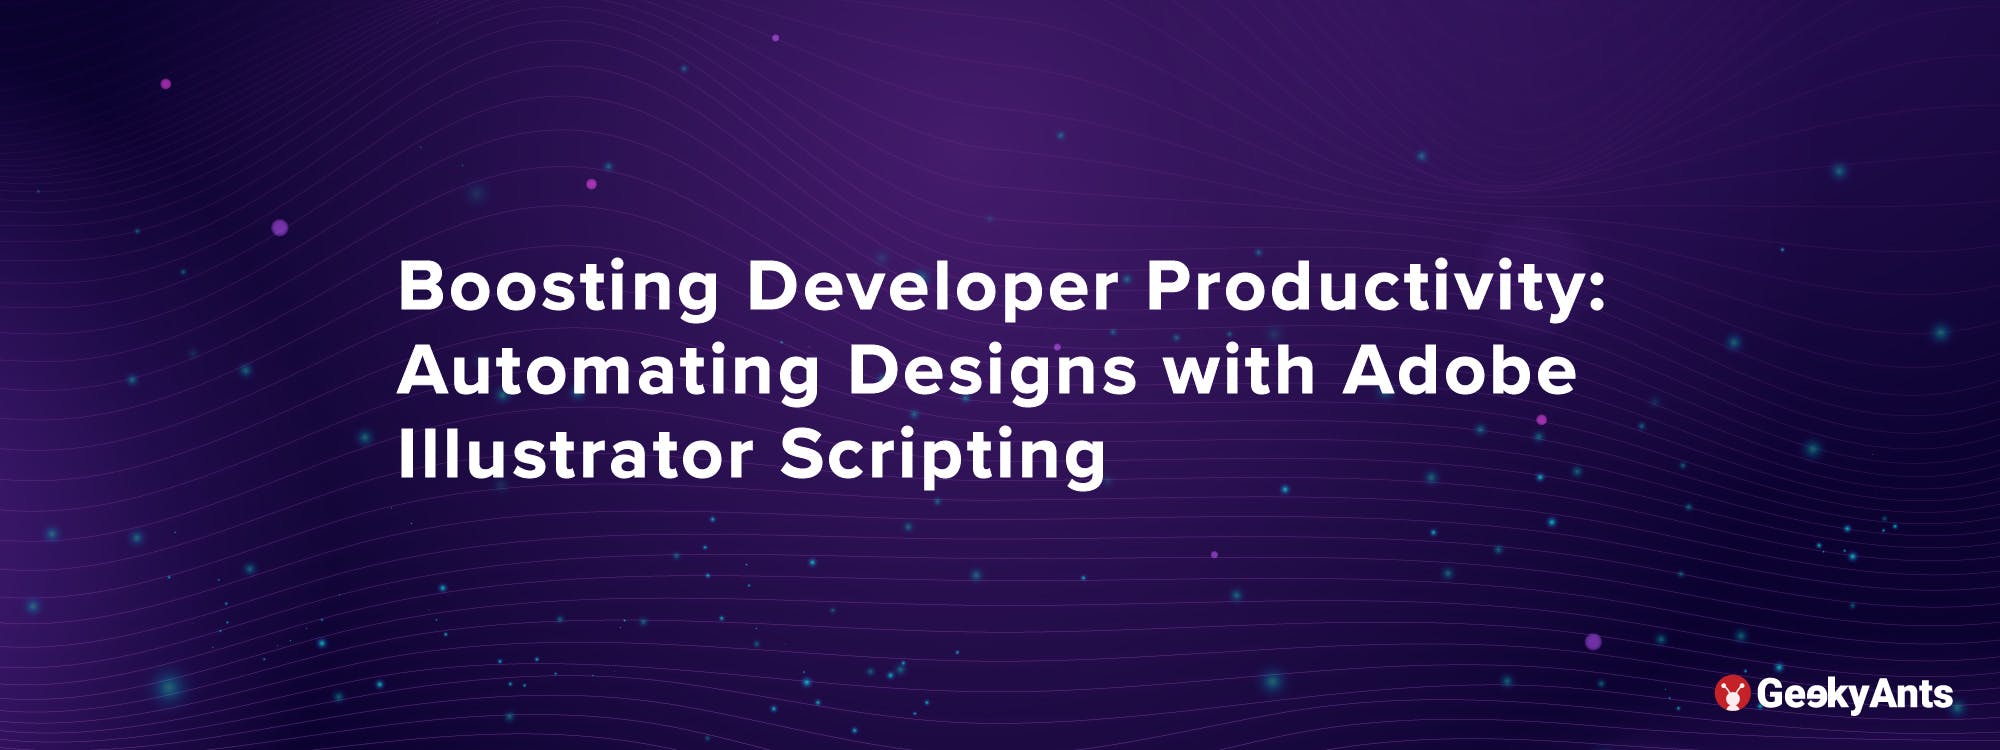 How Adobe Illustrator Scripts Can Boost Developer Productivity